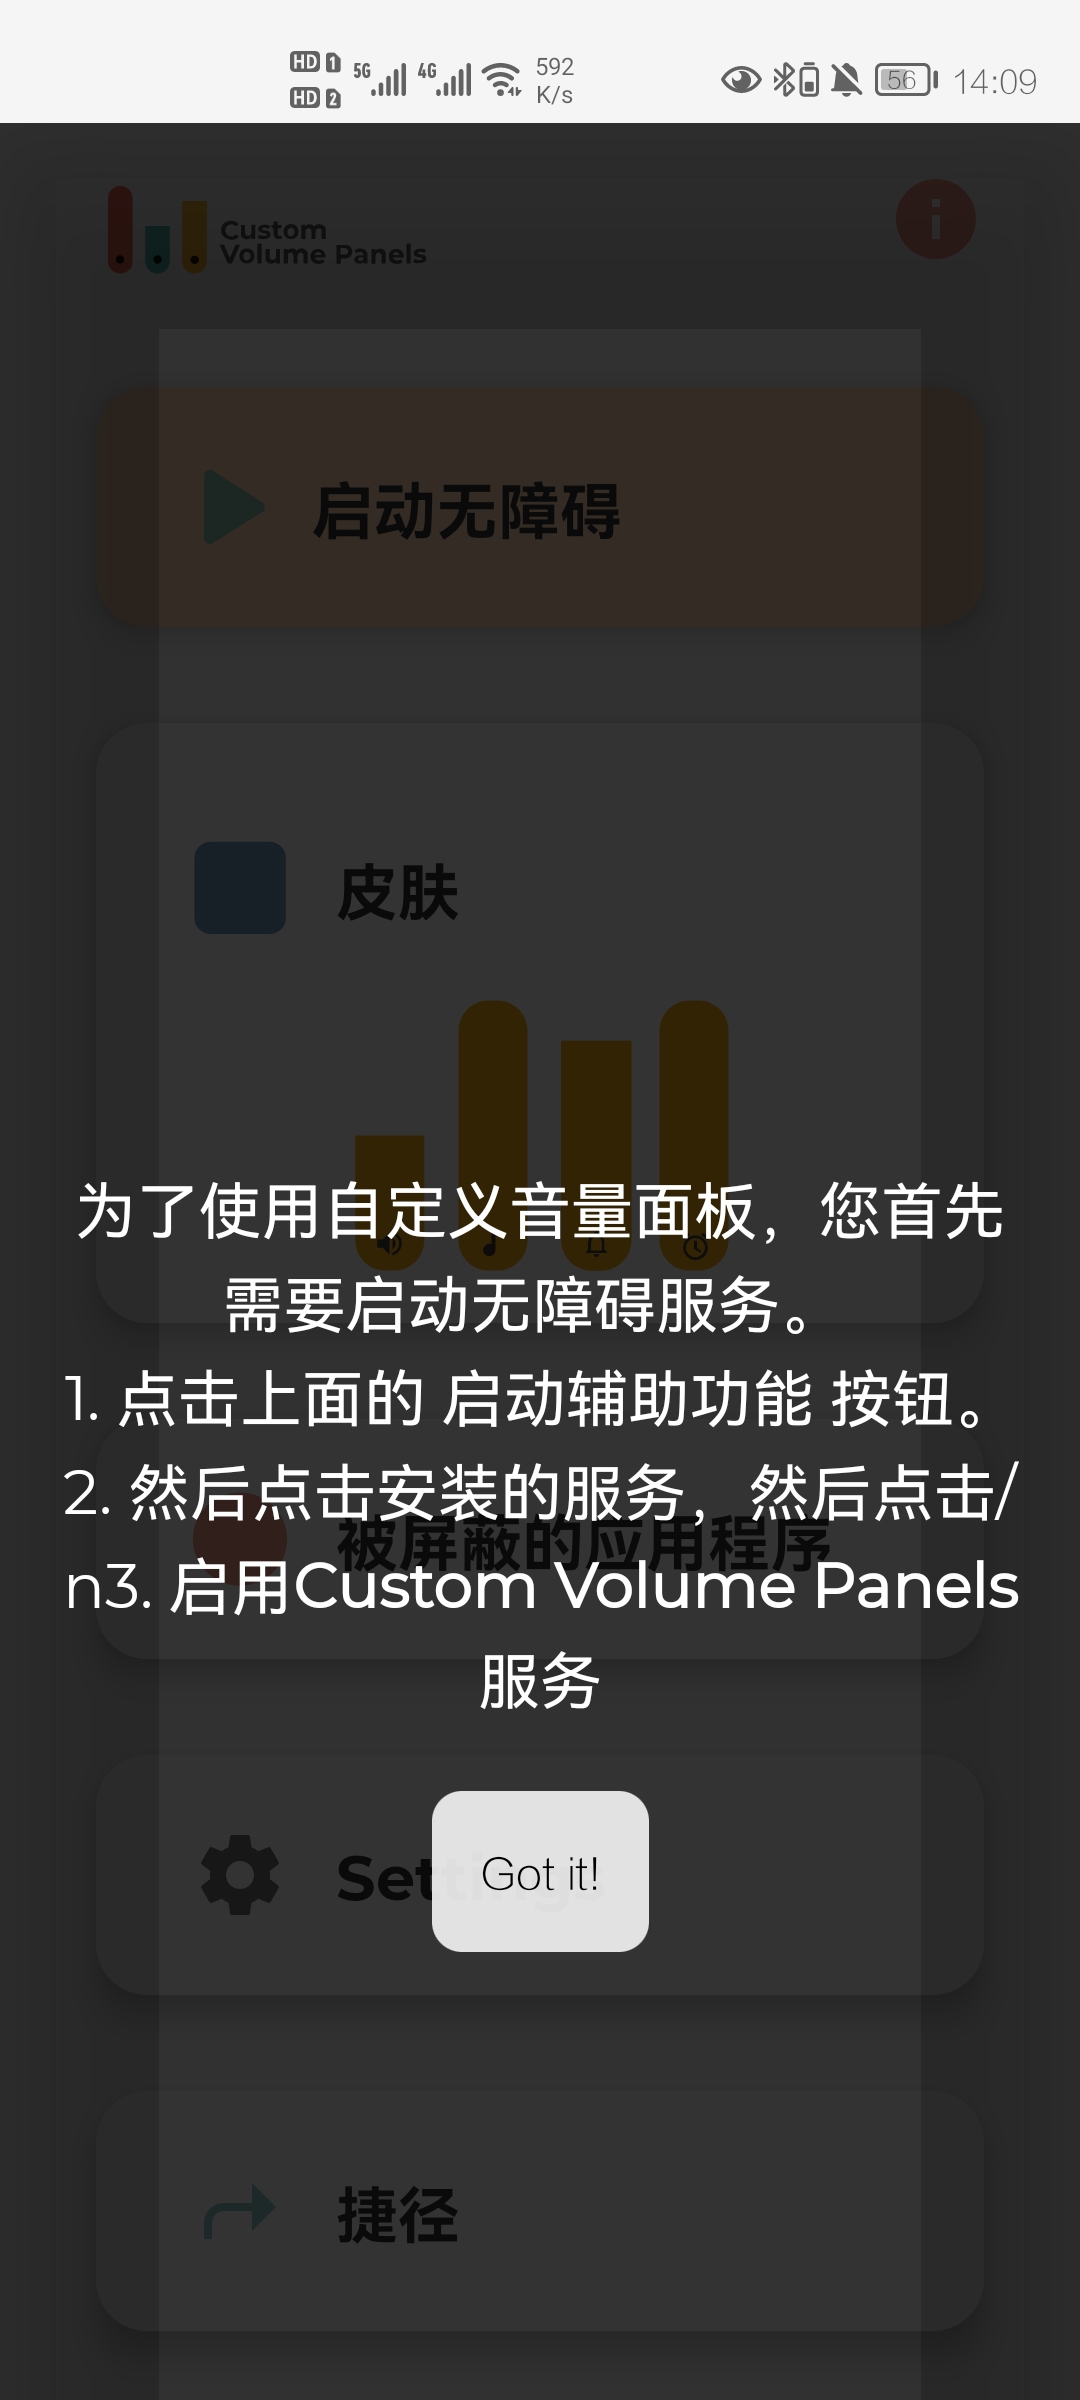 Custom Volume Panels中文版截图4